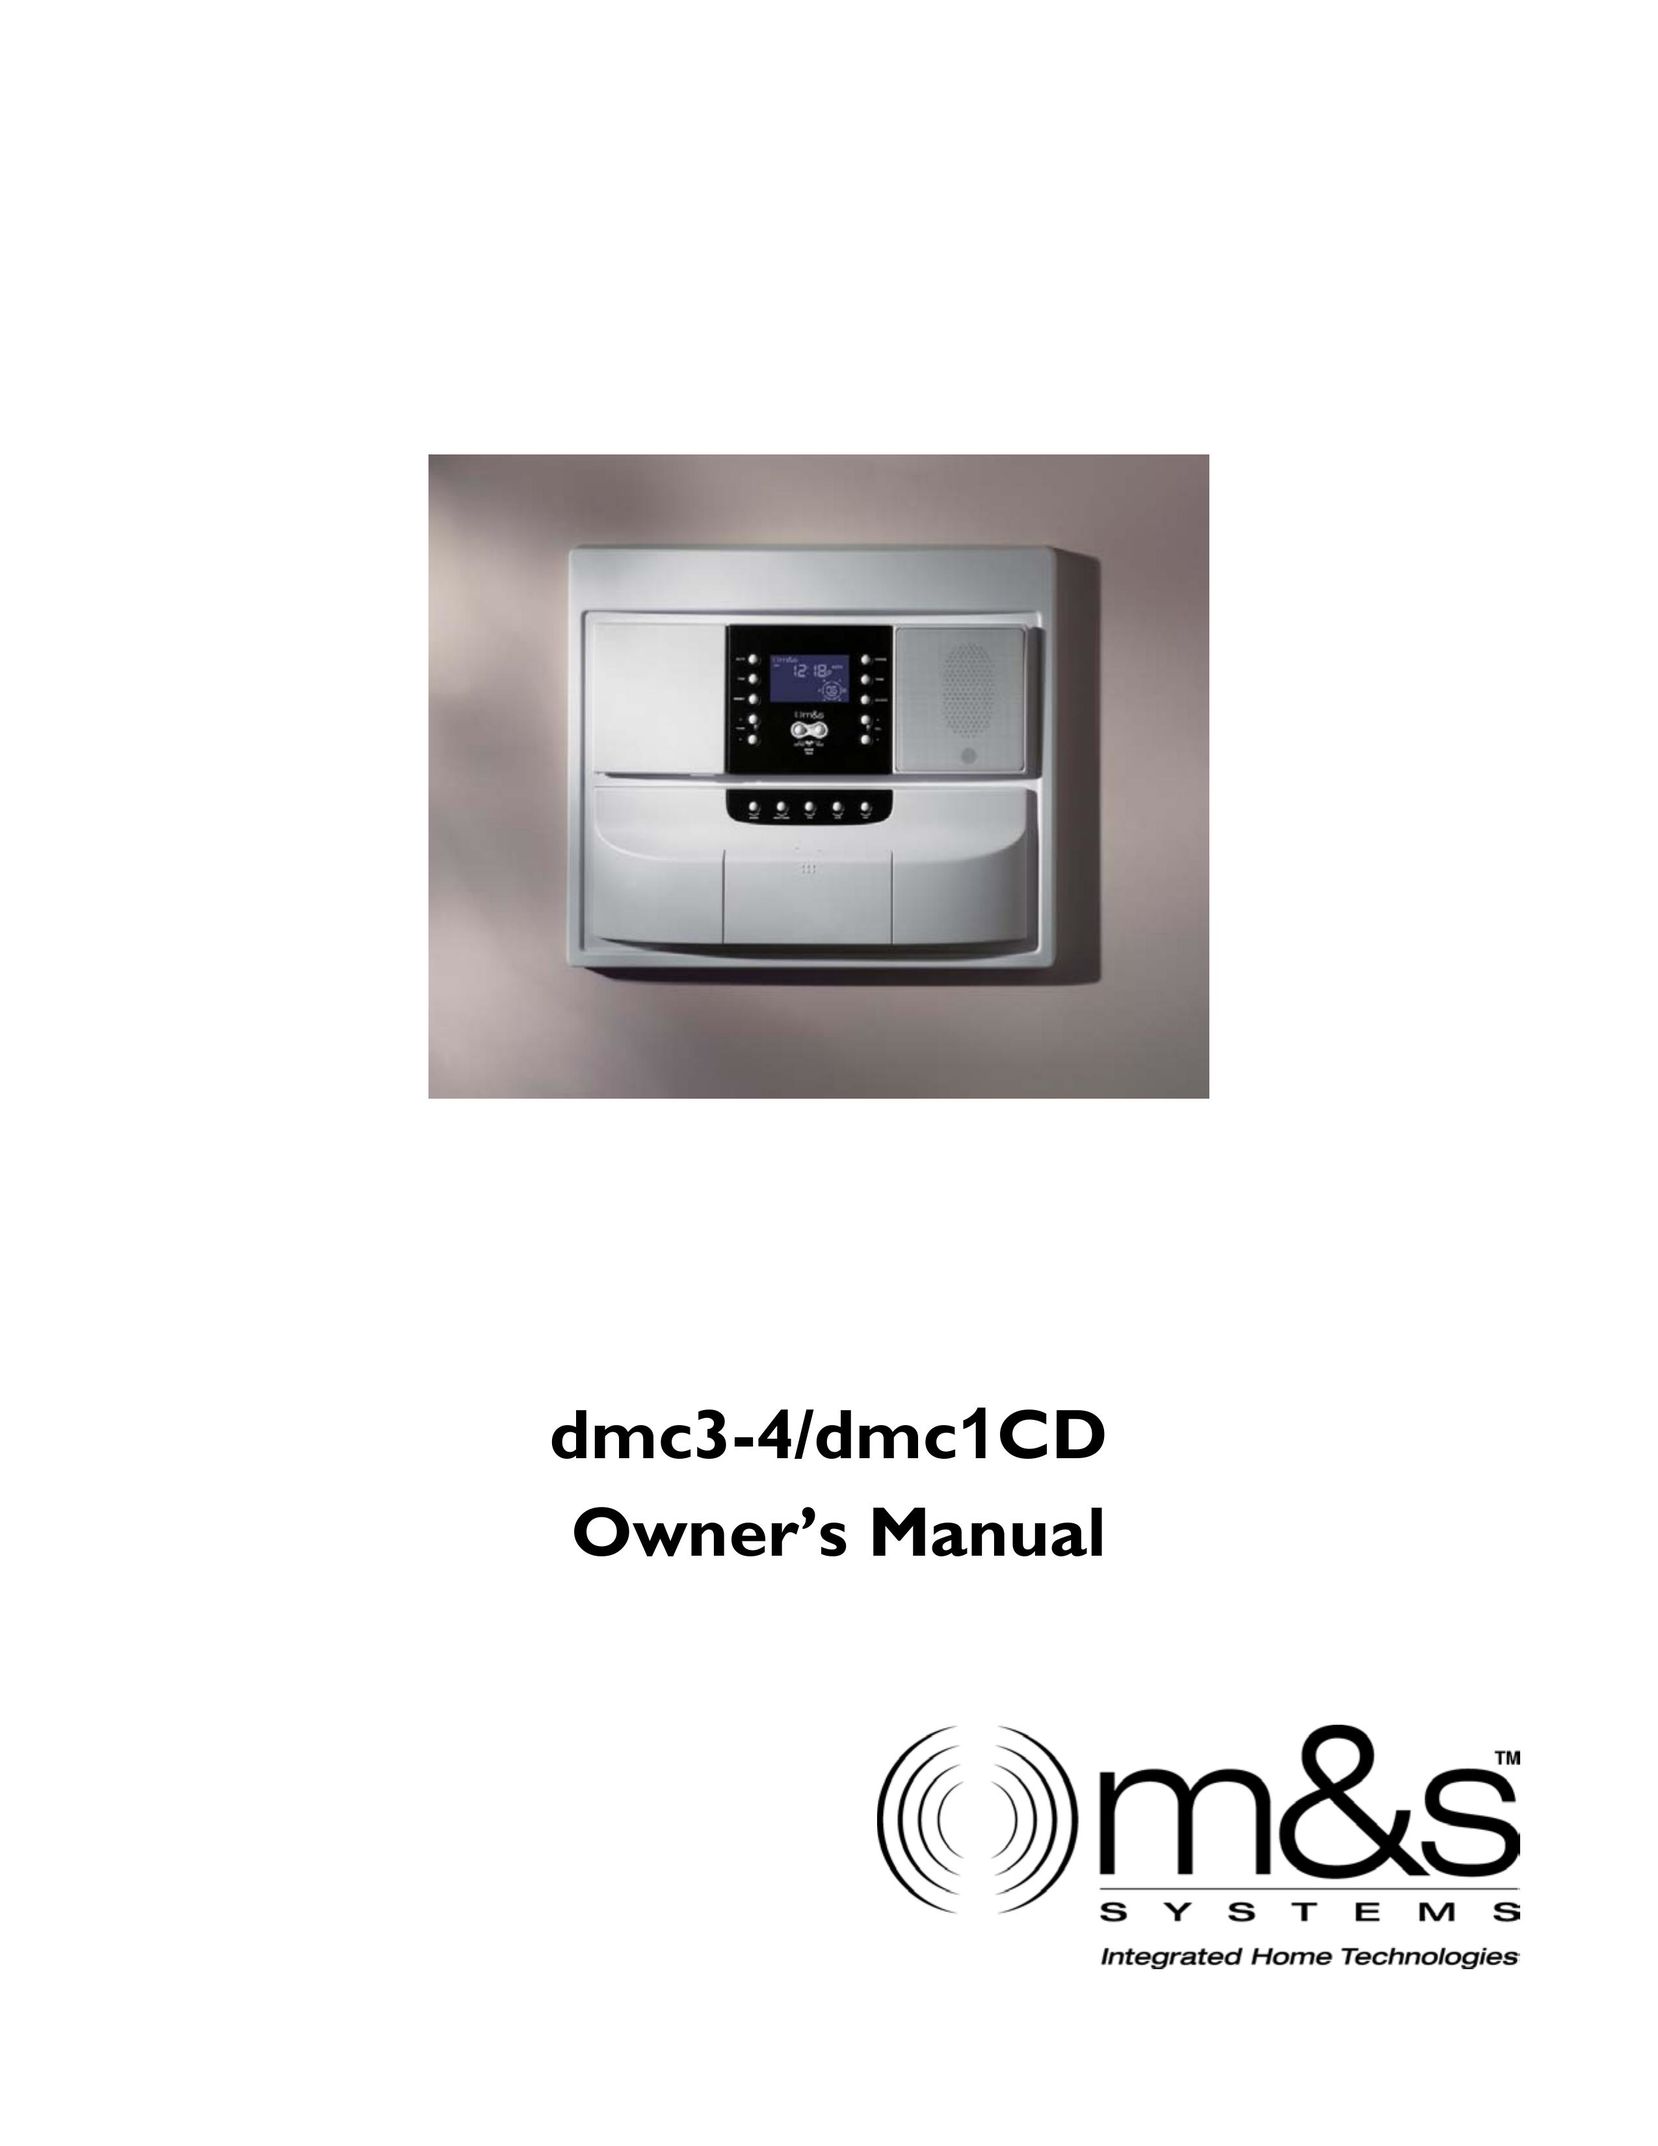 M&S Systems dmc3-4/dmc1CD Speaker User Manual